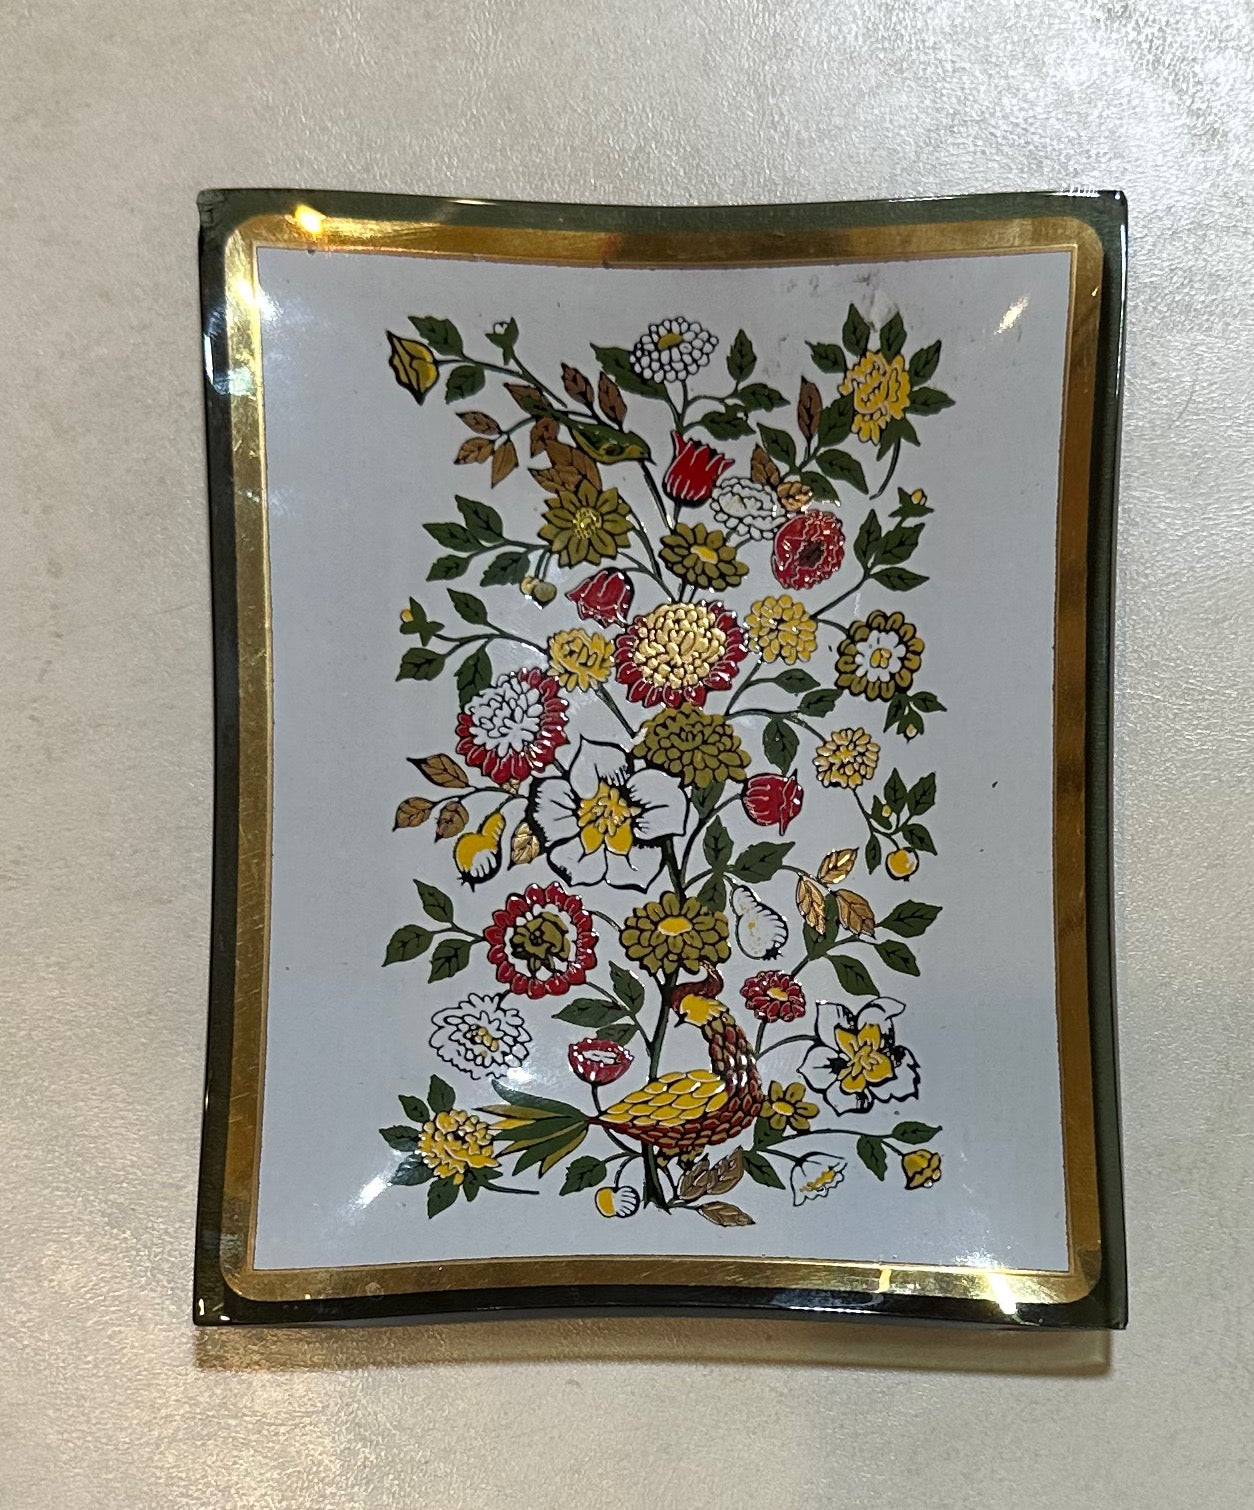 Decor Vintage Smoked Bent Glass Bird & Floral Design on White Background Trinket Dish